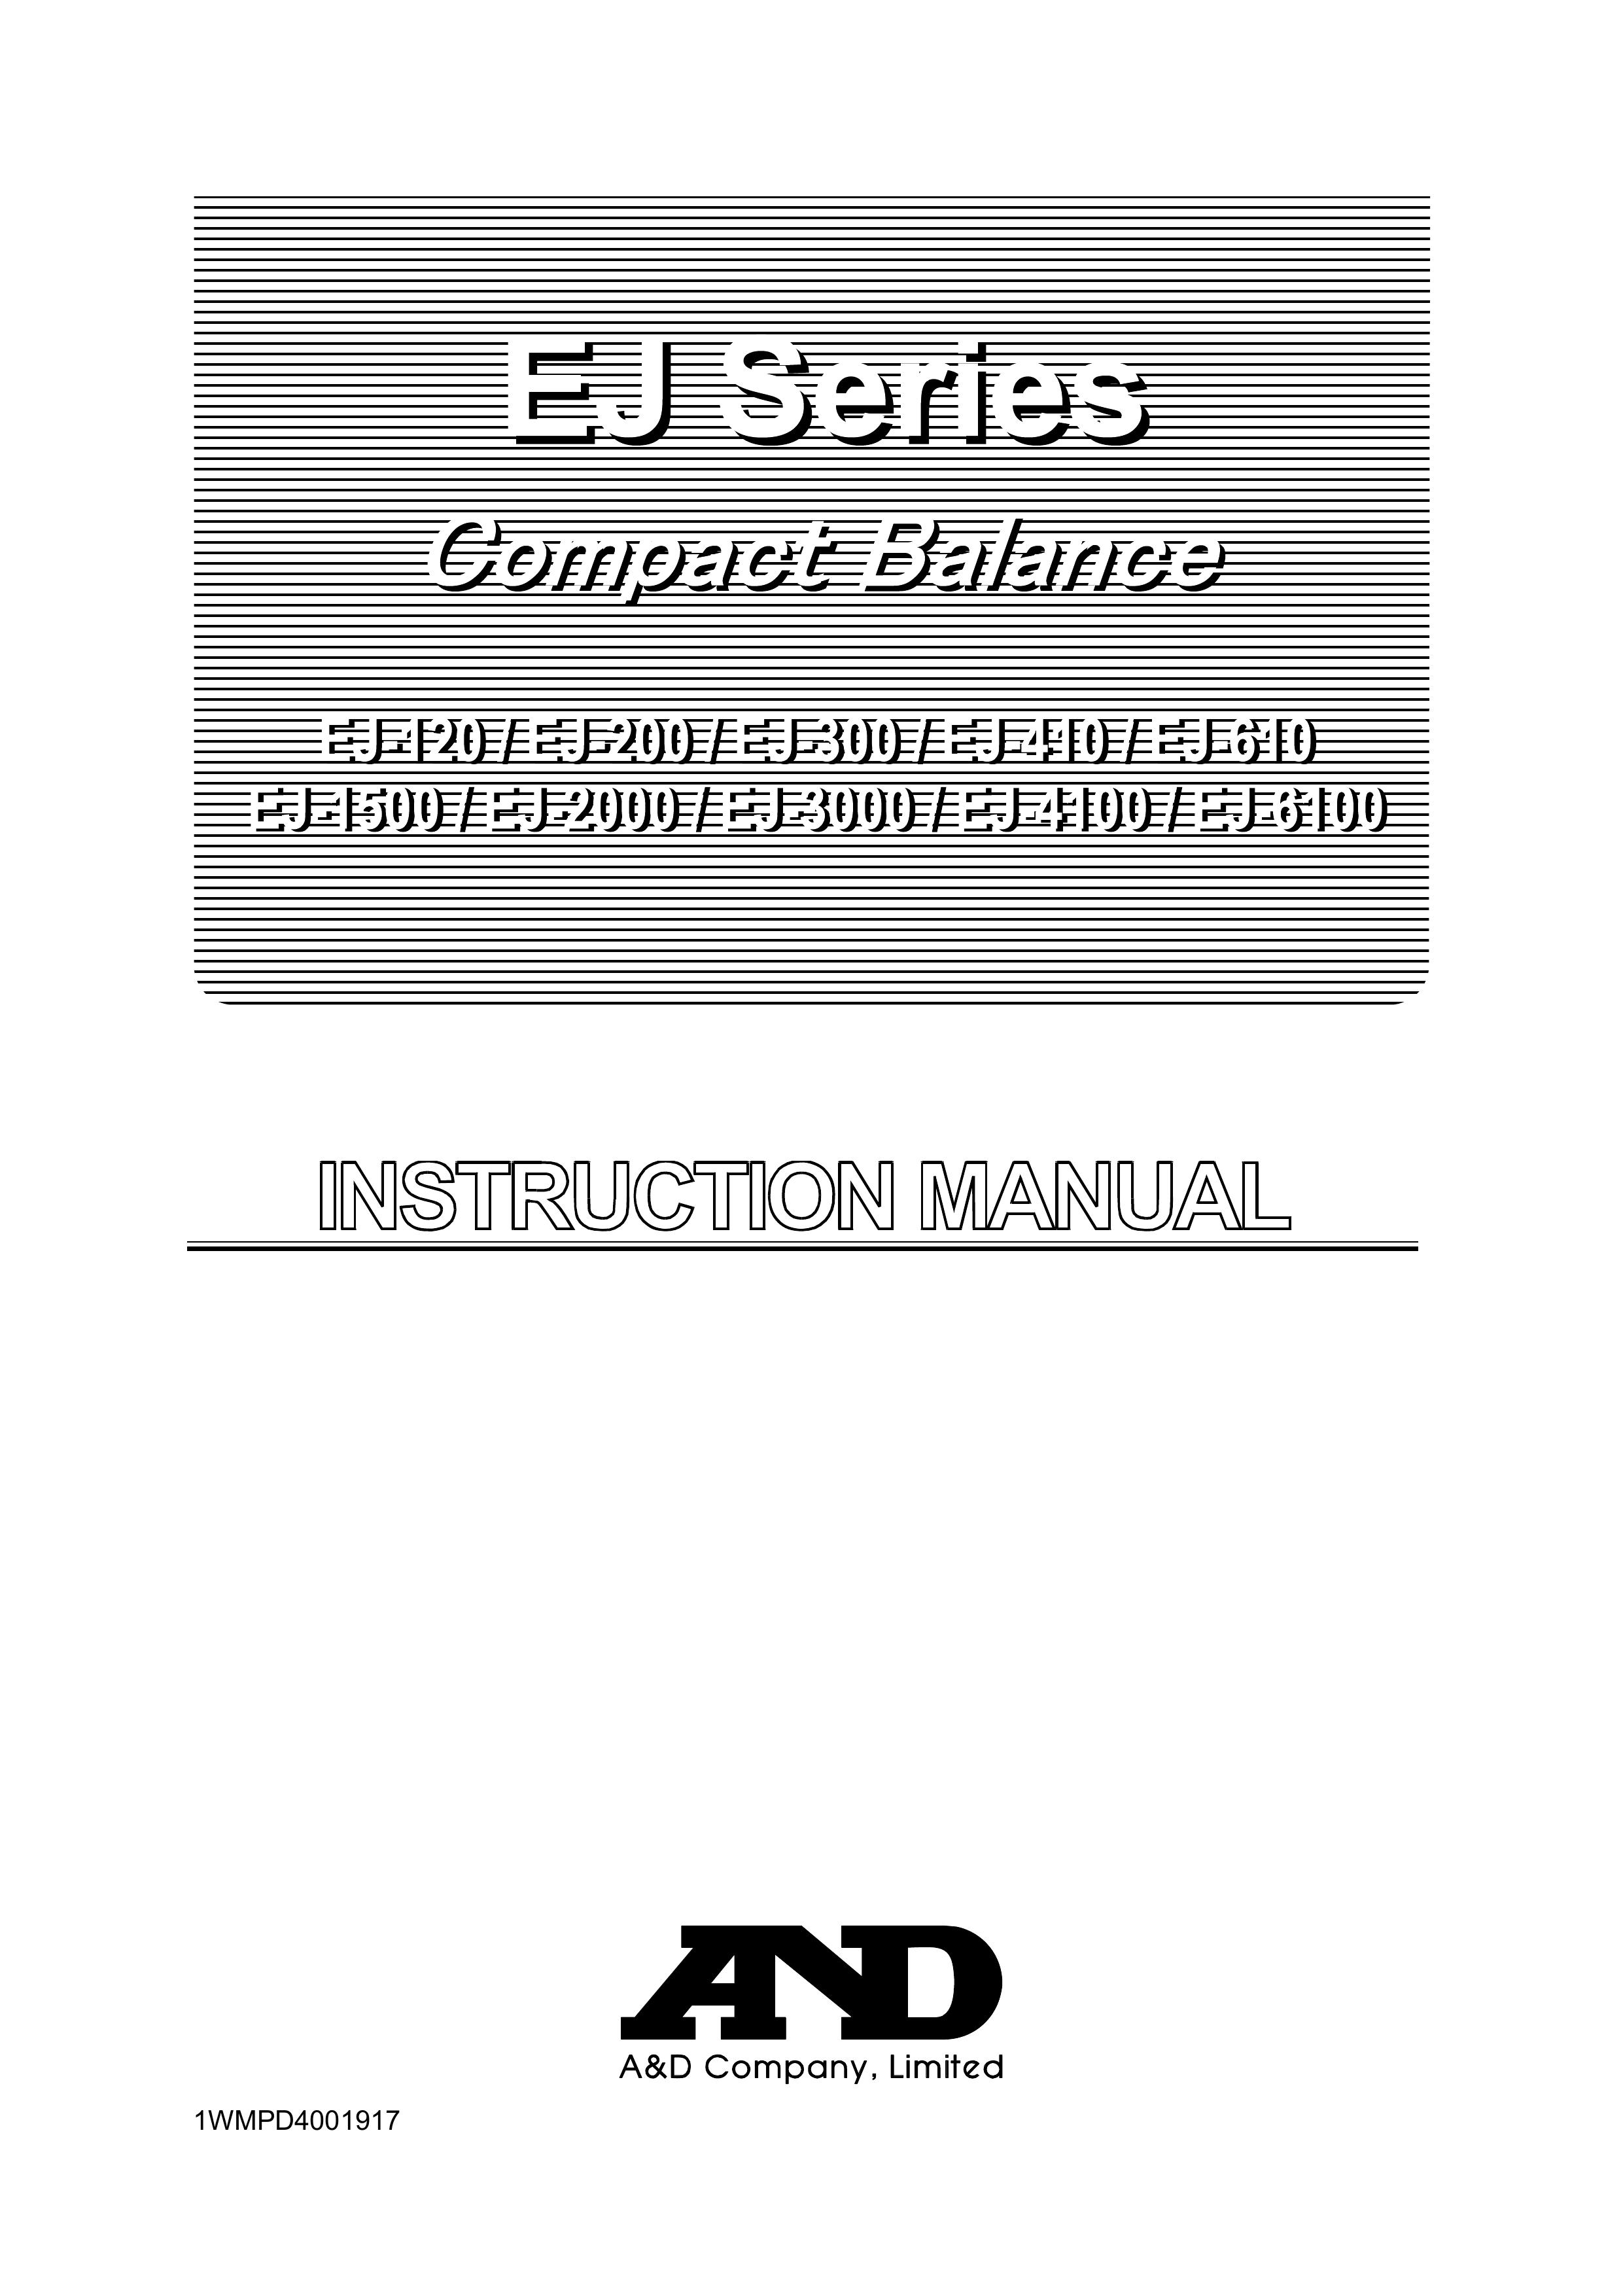 A&D EJ-200 Scale User Manual